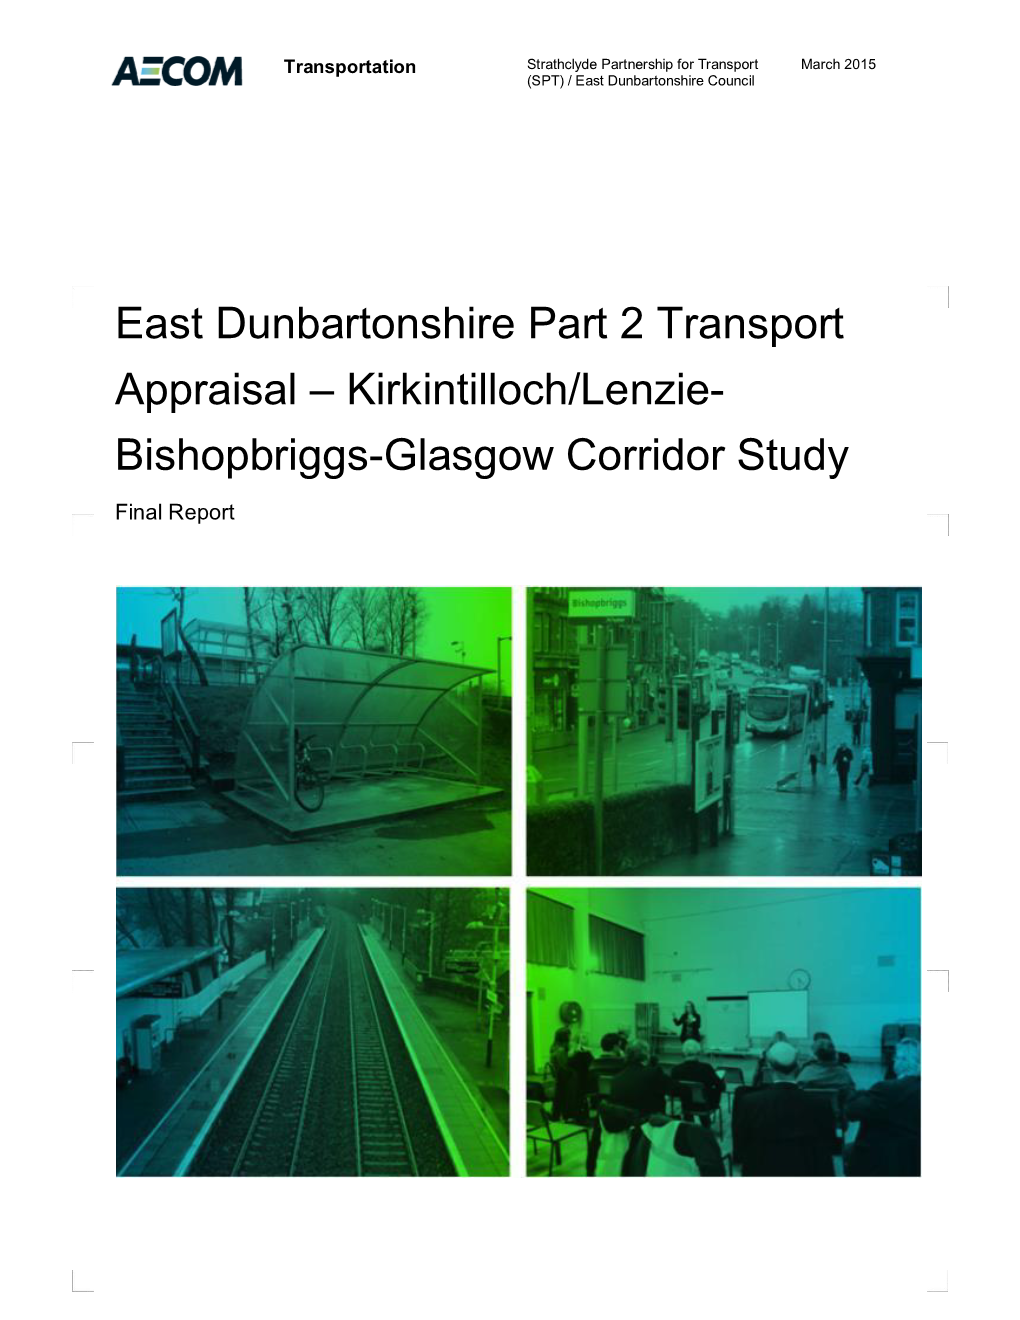 Kirkintilloch/Lenzie- Bishopbriggs-Glasgow Corridor Study